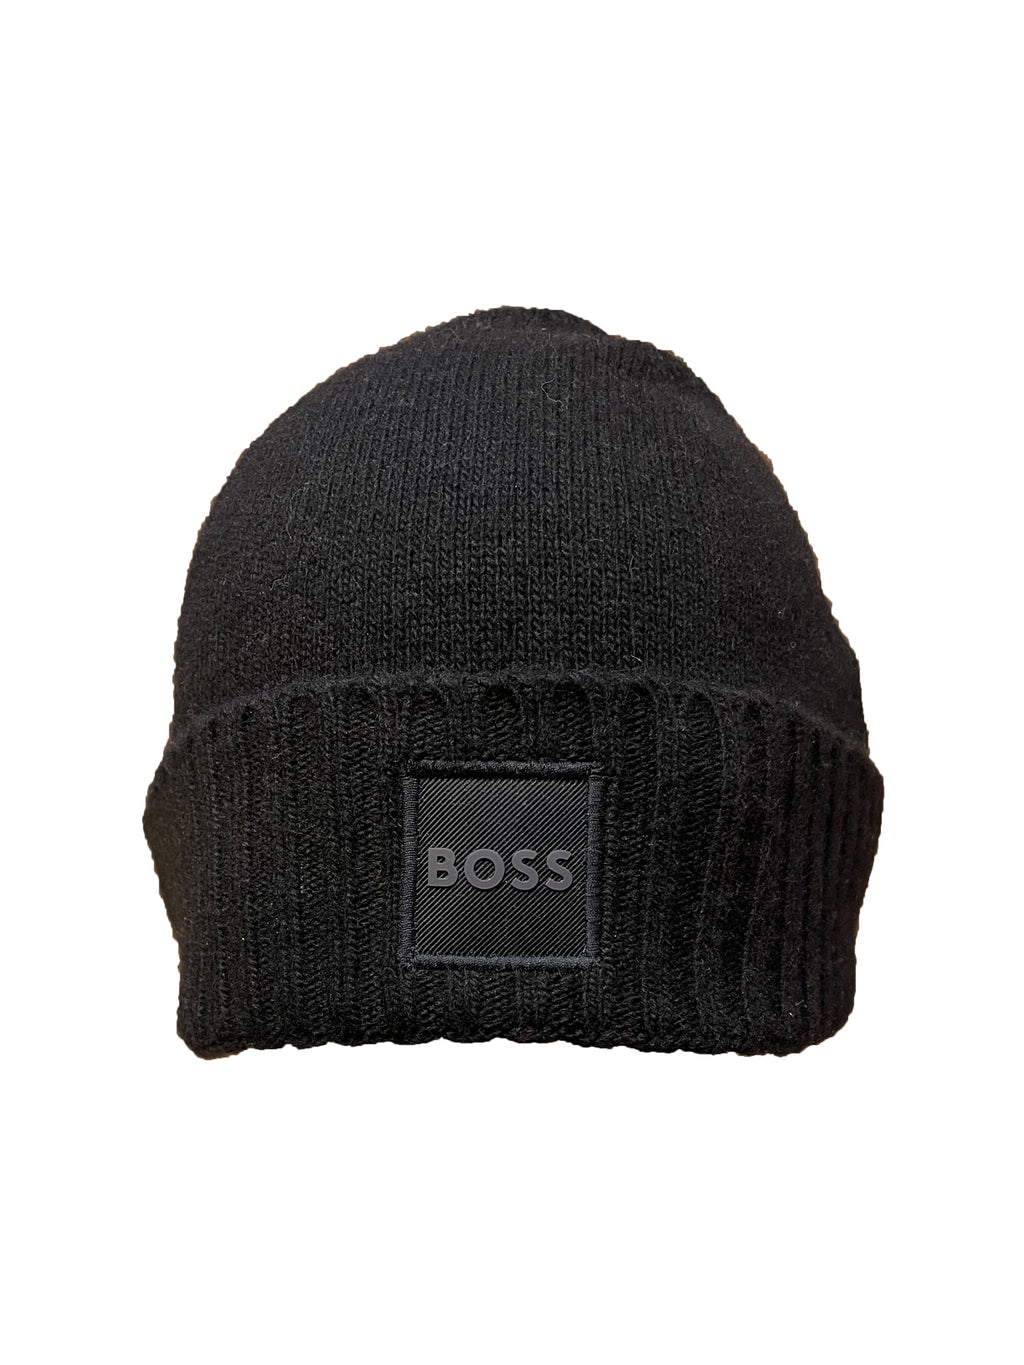 hugo-boss-beanie-black-kaios-50476453